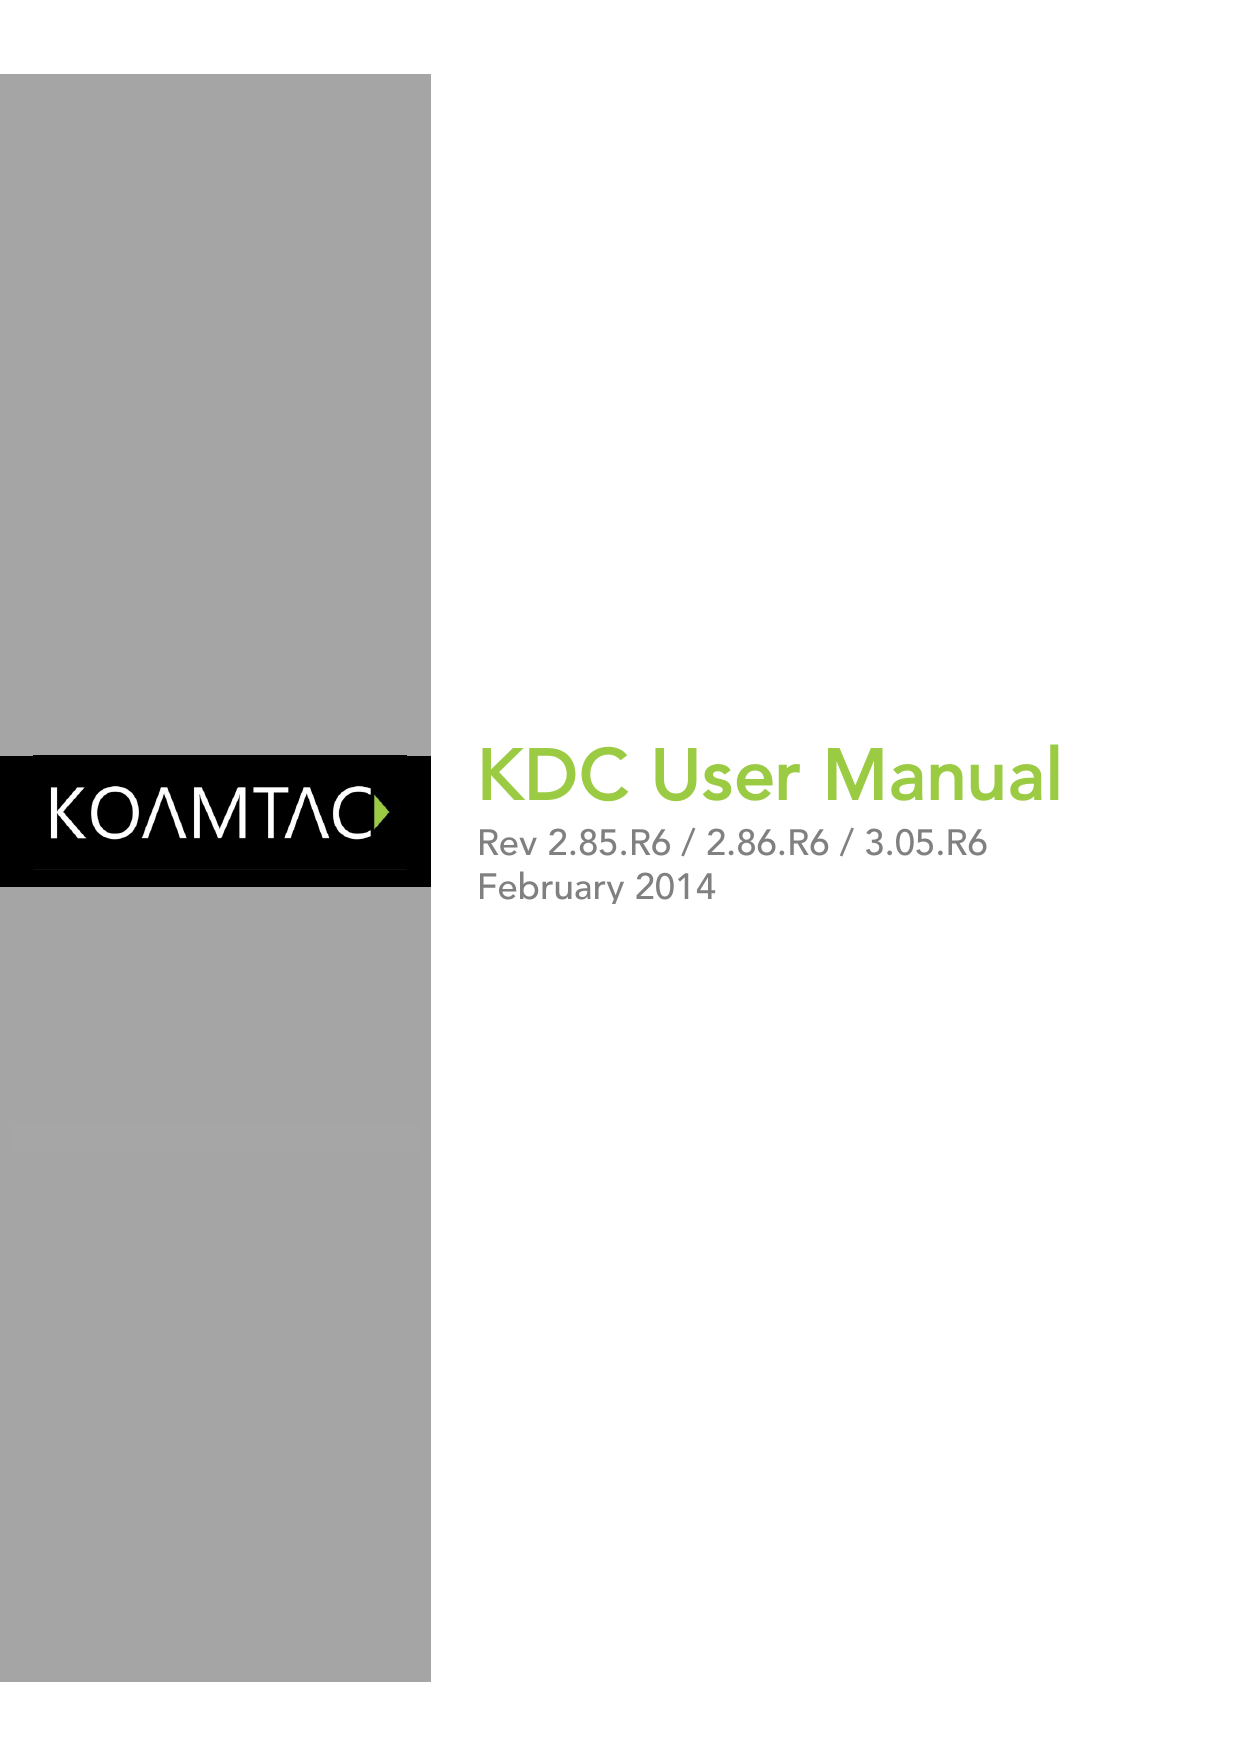                                                                             KDC User Manual Rev 2.85.R6 / 2.86.R6 / 3.05.R6  February 2014 